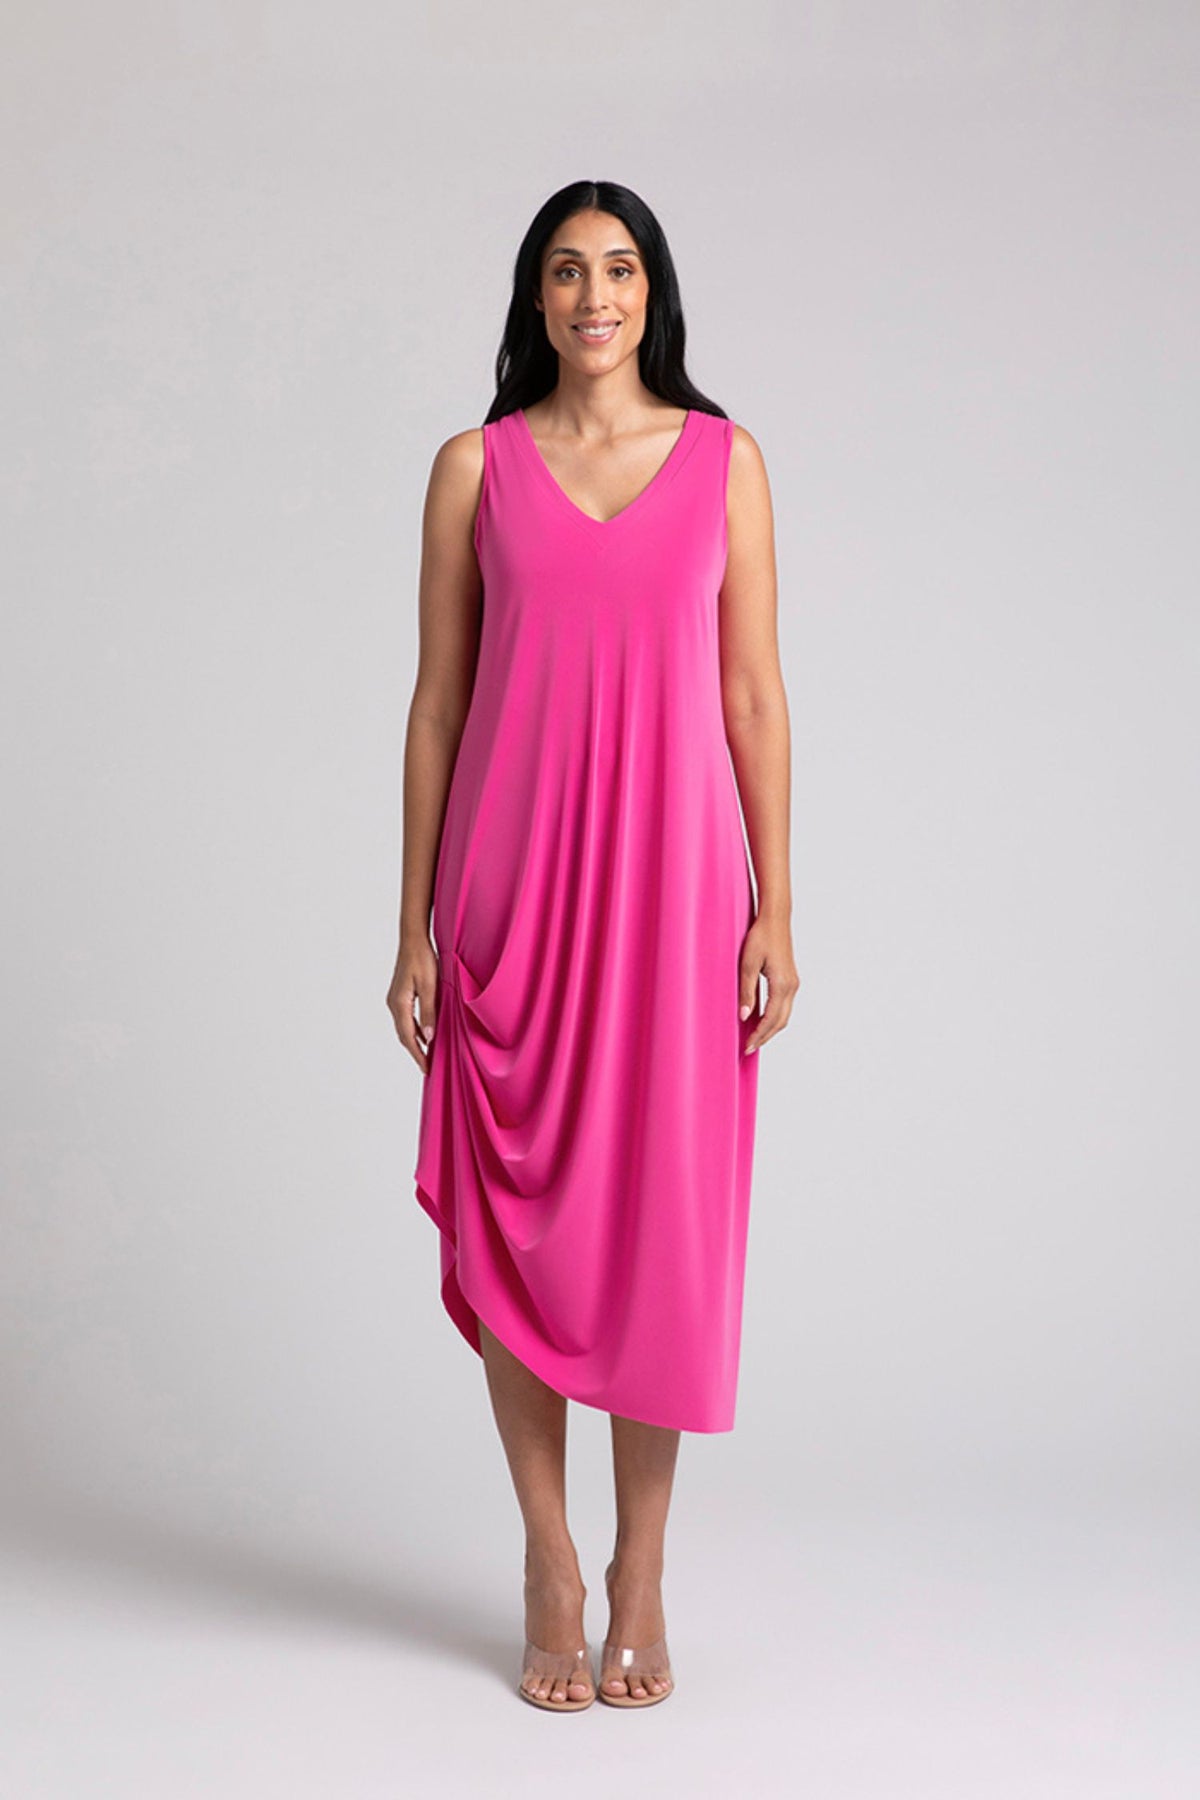 Sympli Sleeveless Drama Dress - Style 28168, front, peony